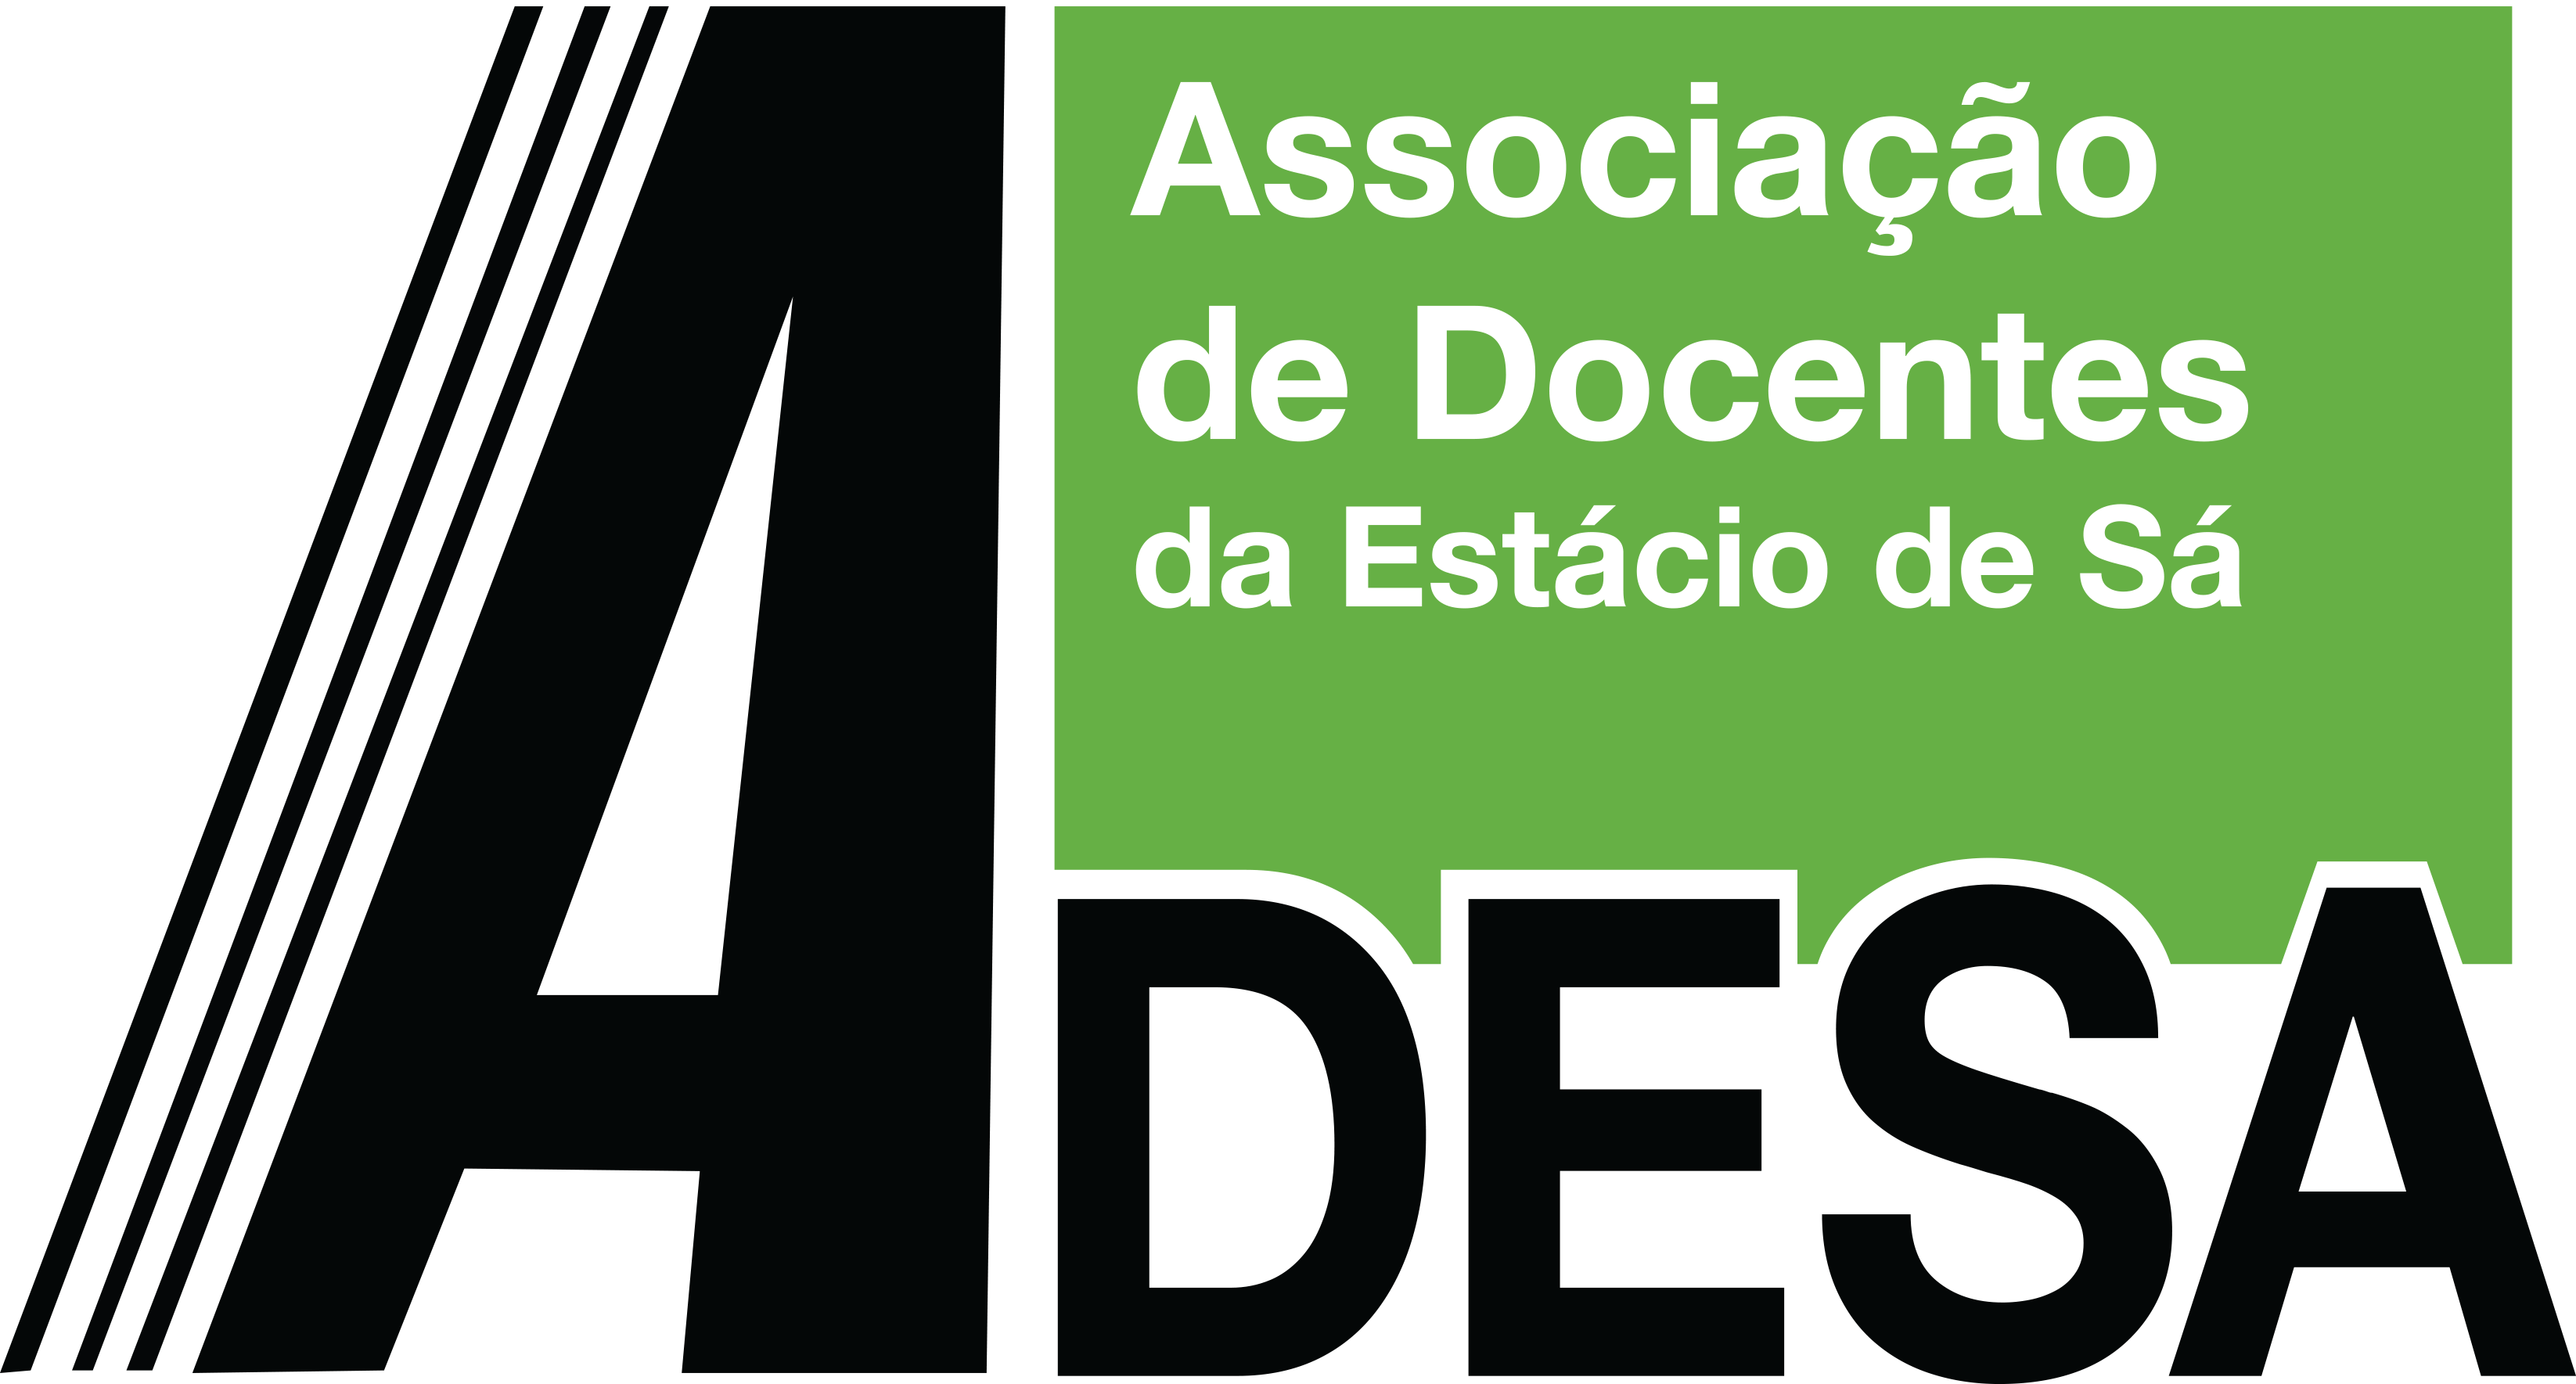 ADESA Logo - File:LOGO DA ADESA.png - Wikimedia Commons